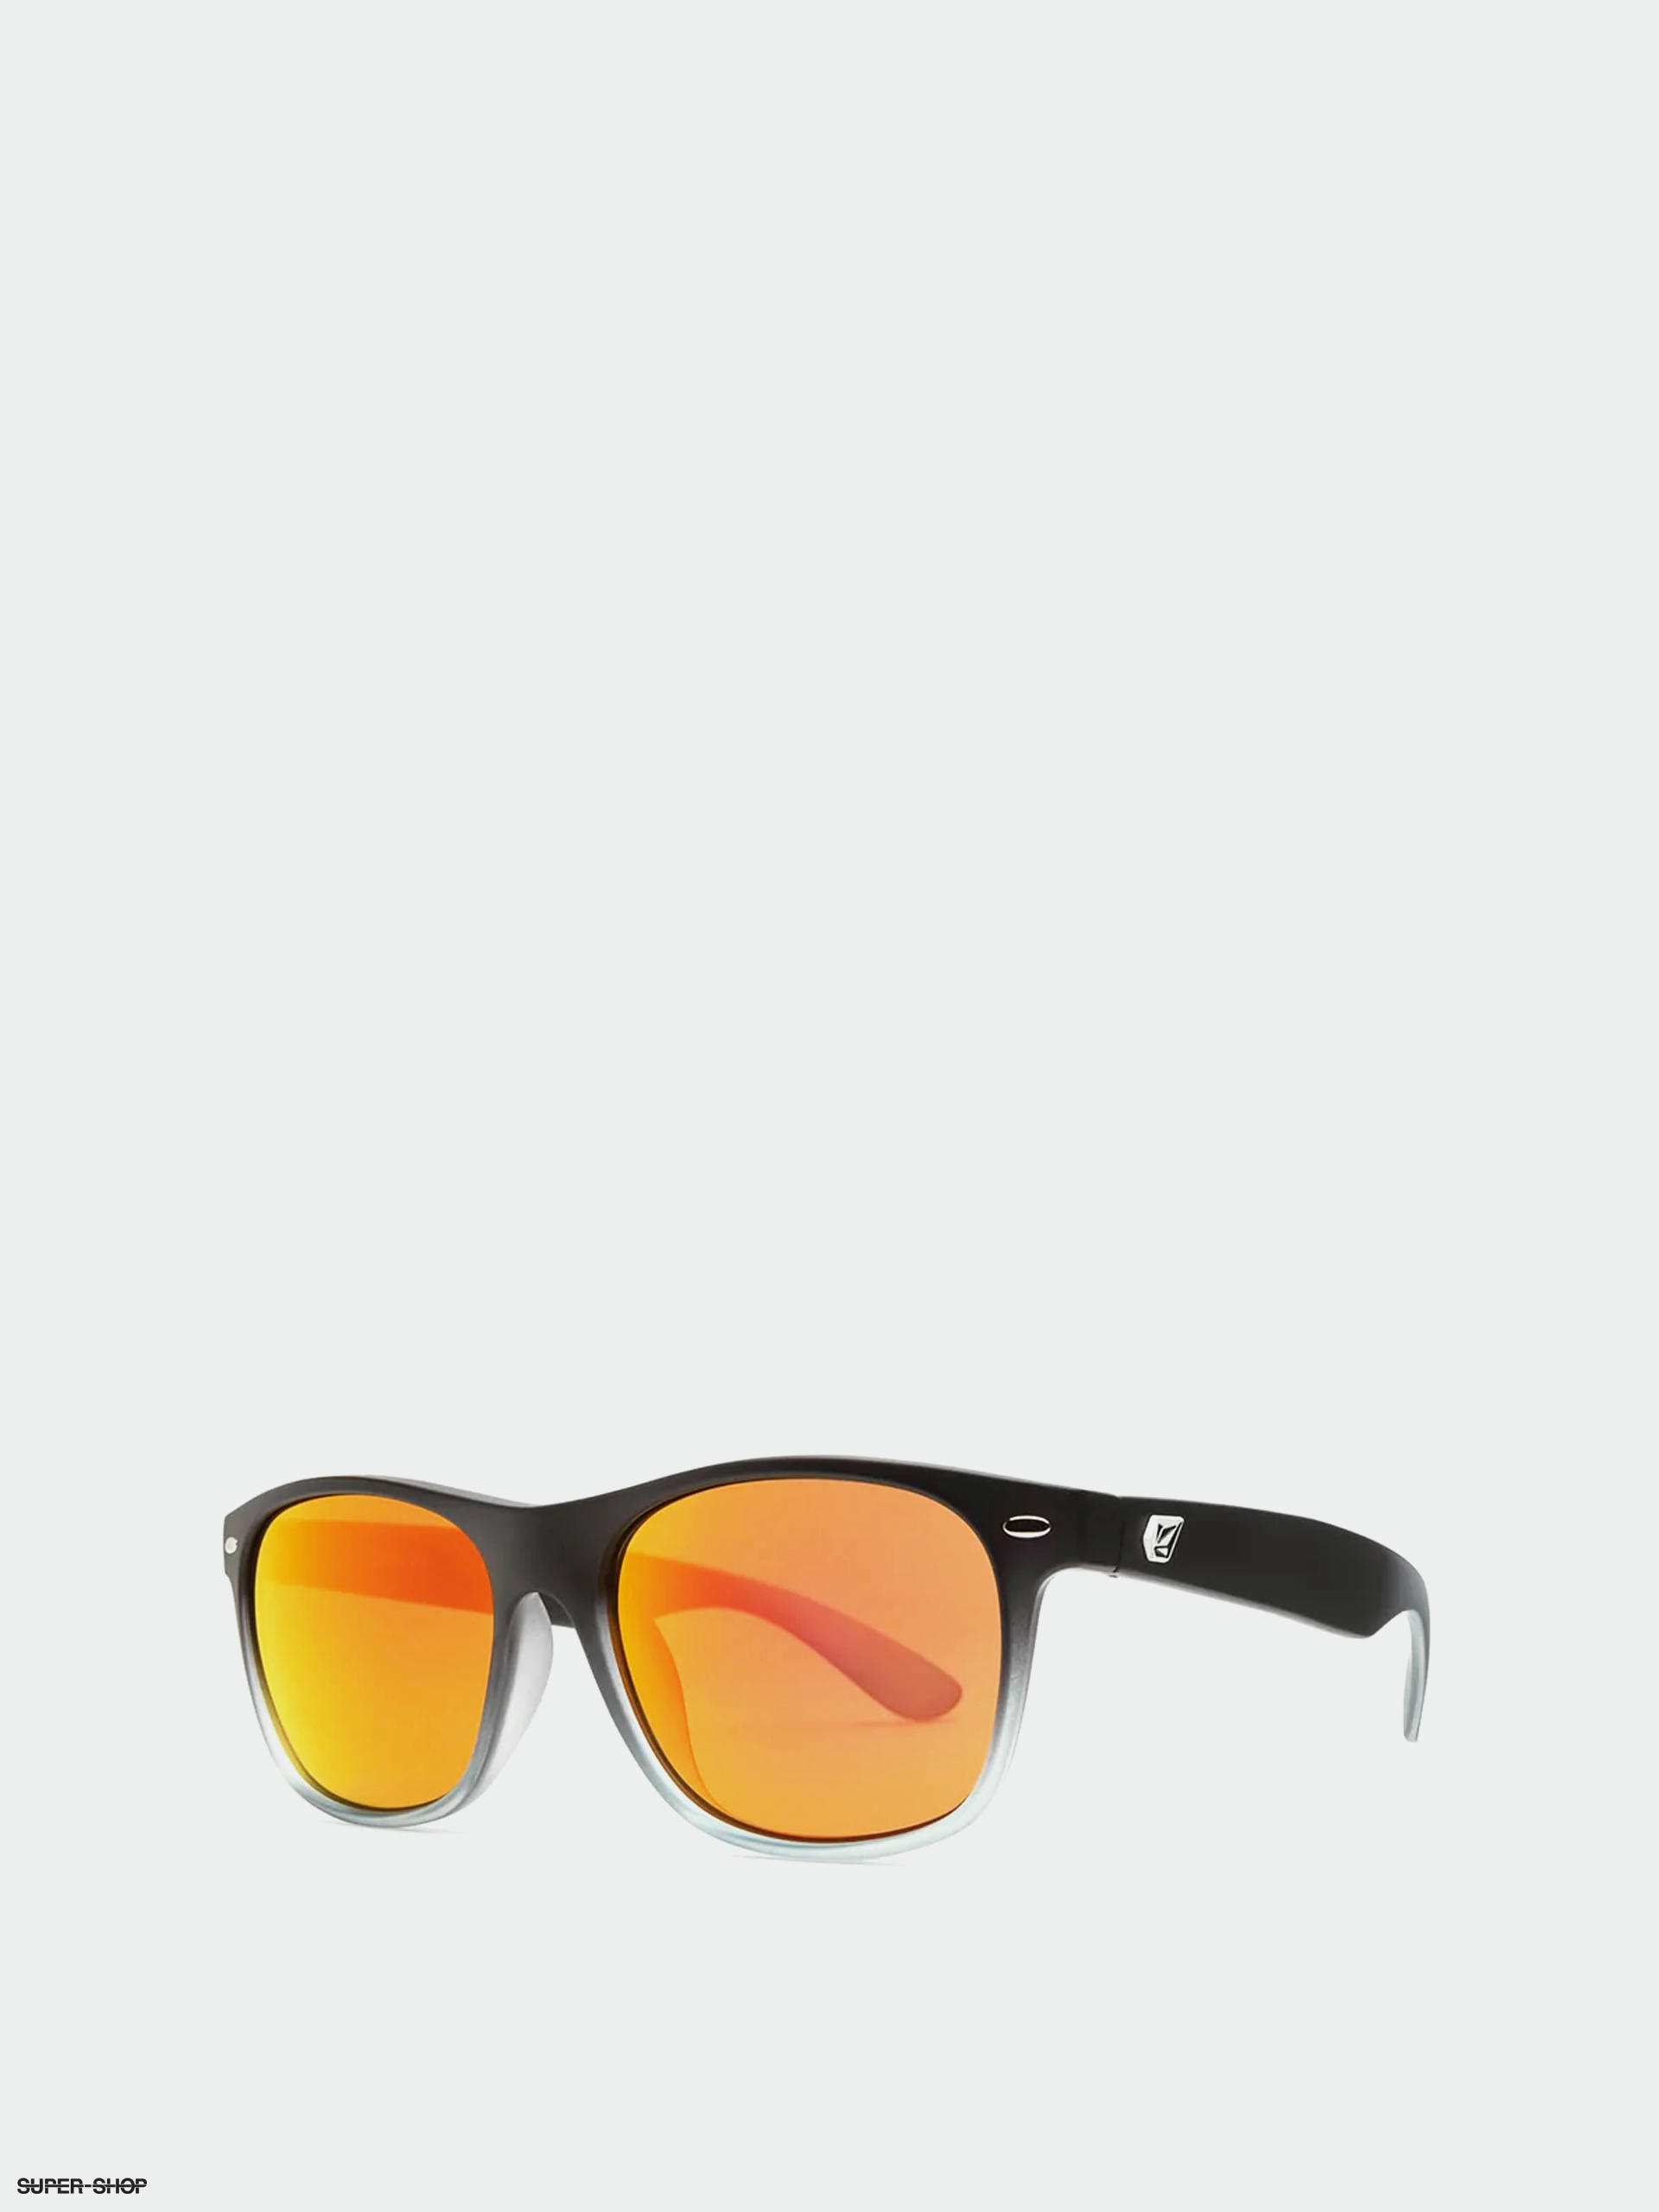 Shop +Beryll Mellow Blue Gradient Rectangular Sunglasses Online | +Beryll -  +Beryll Worn By Good People